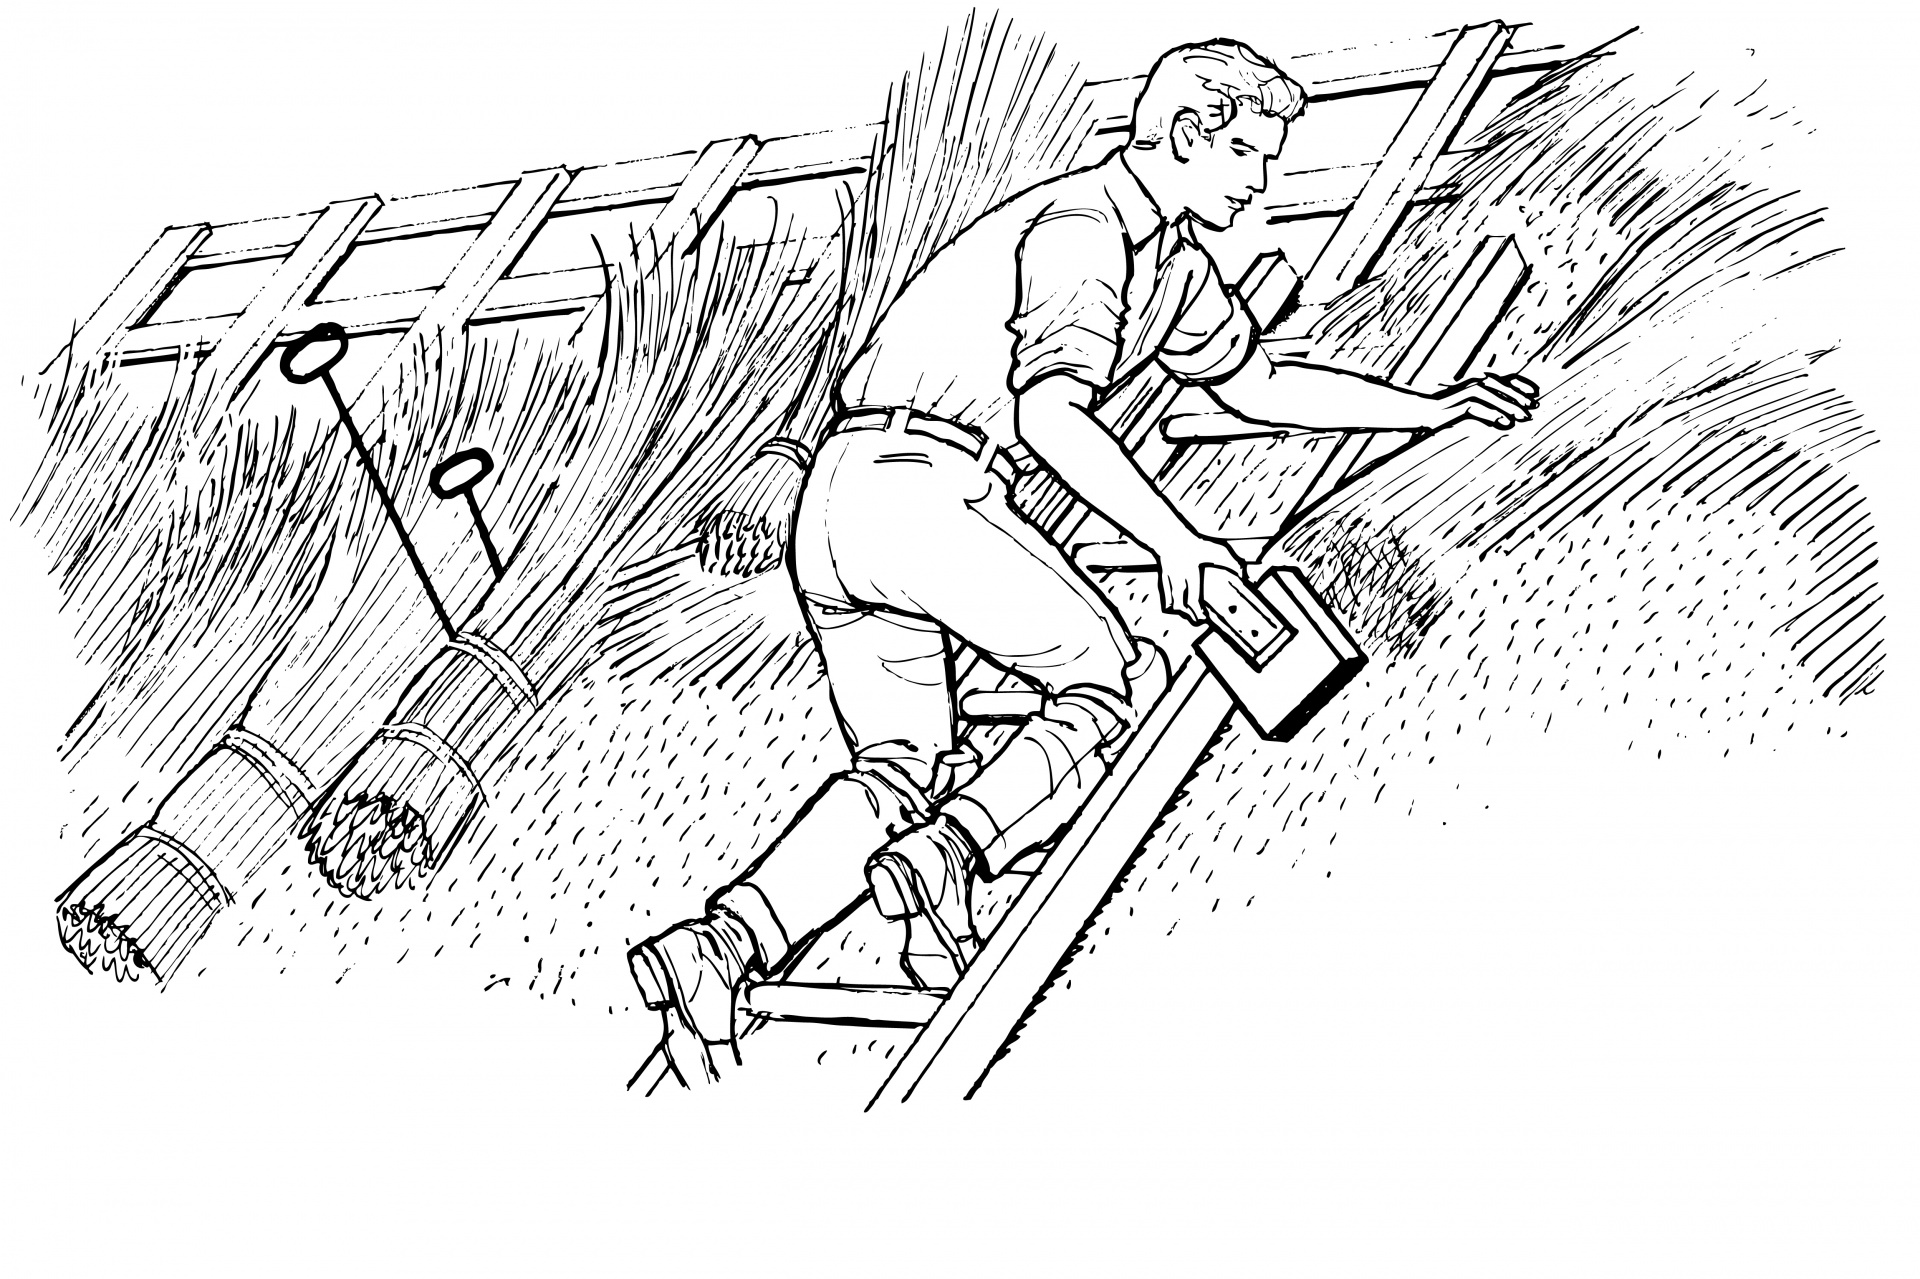 Man repairing thatch roof illustration